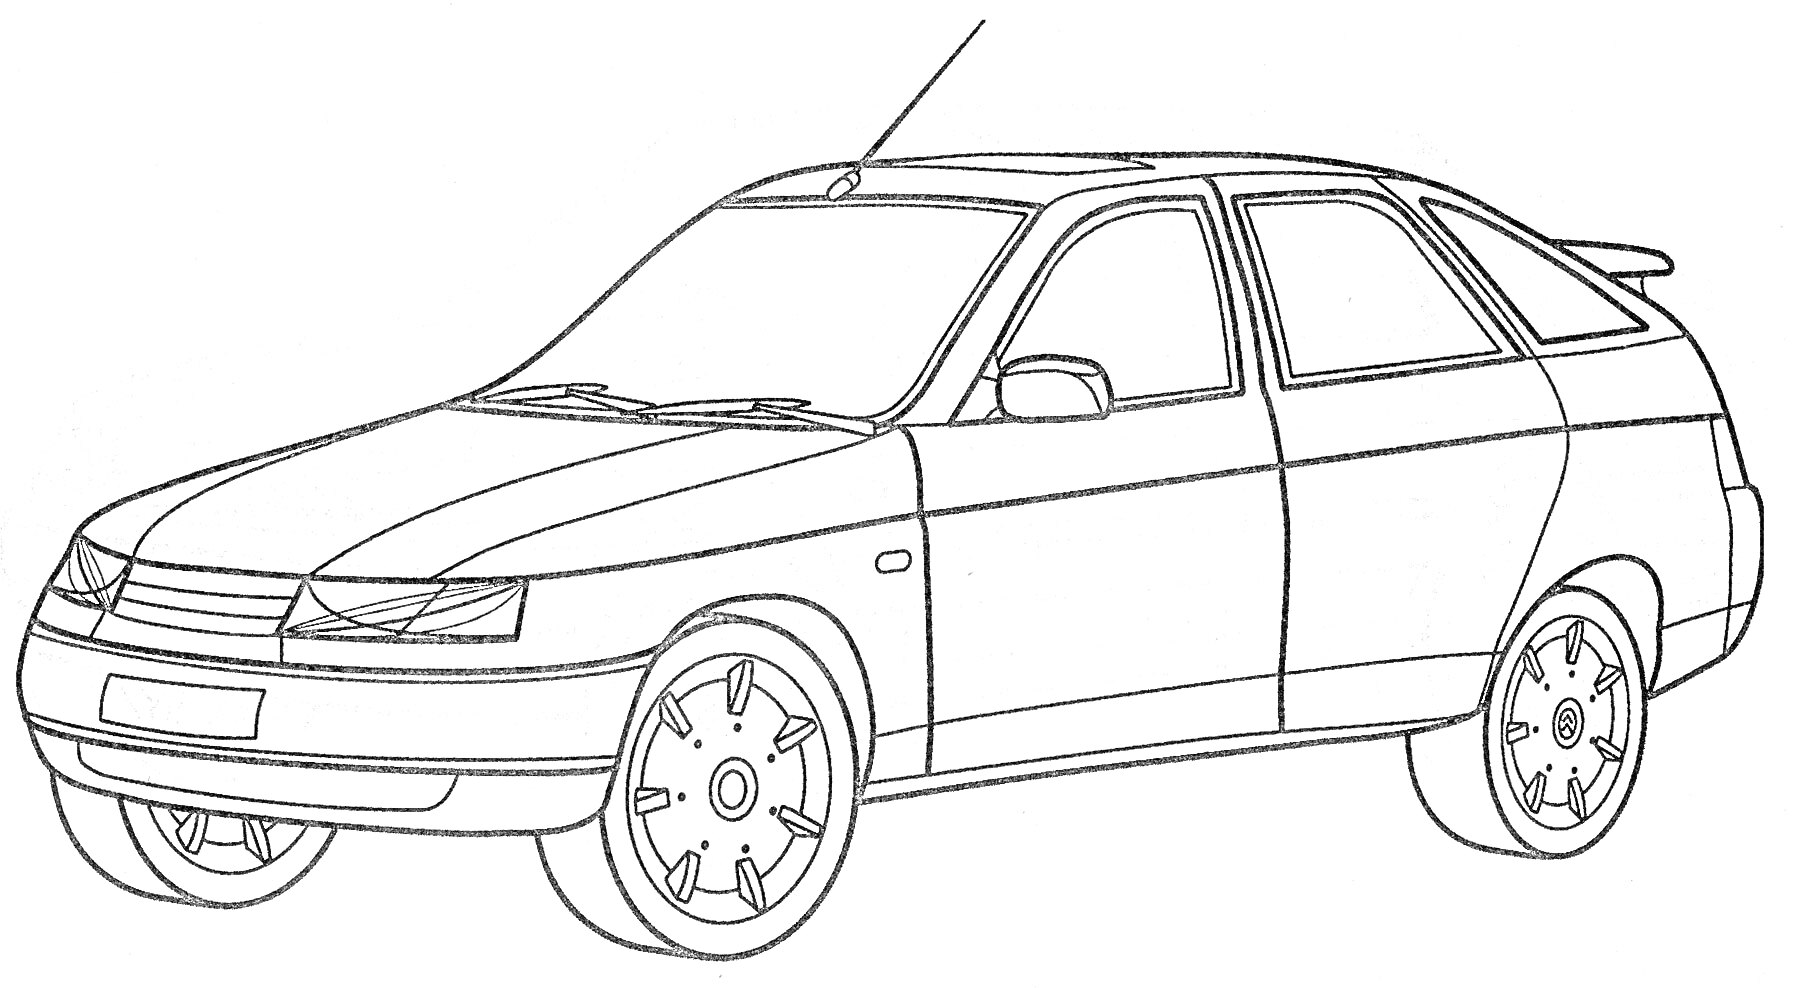 Раскраска Чертеж автомобиля Лада с пятью дверями, антенна на крыше